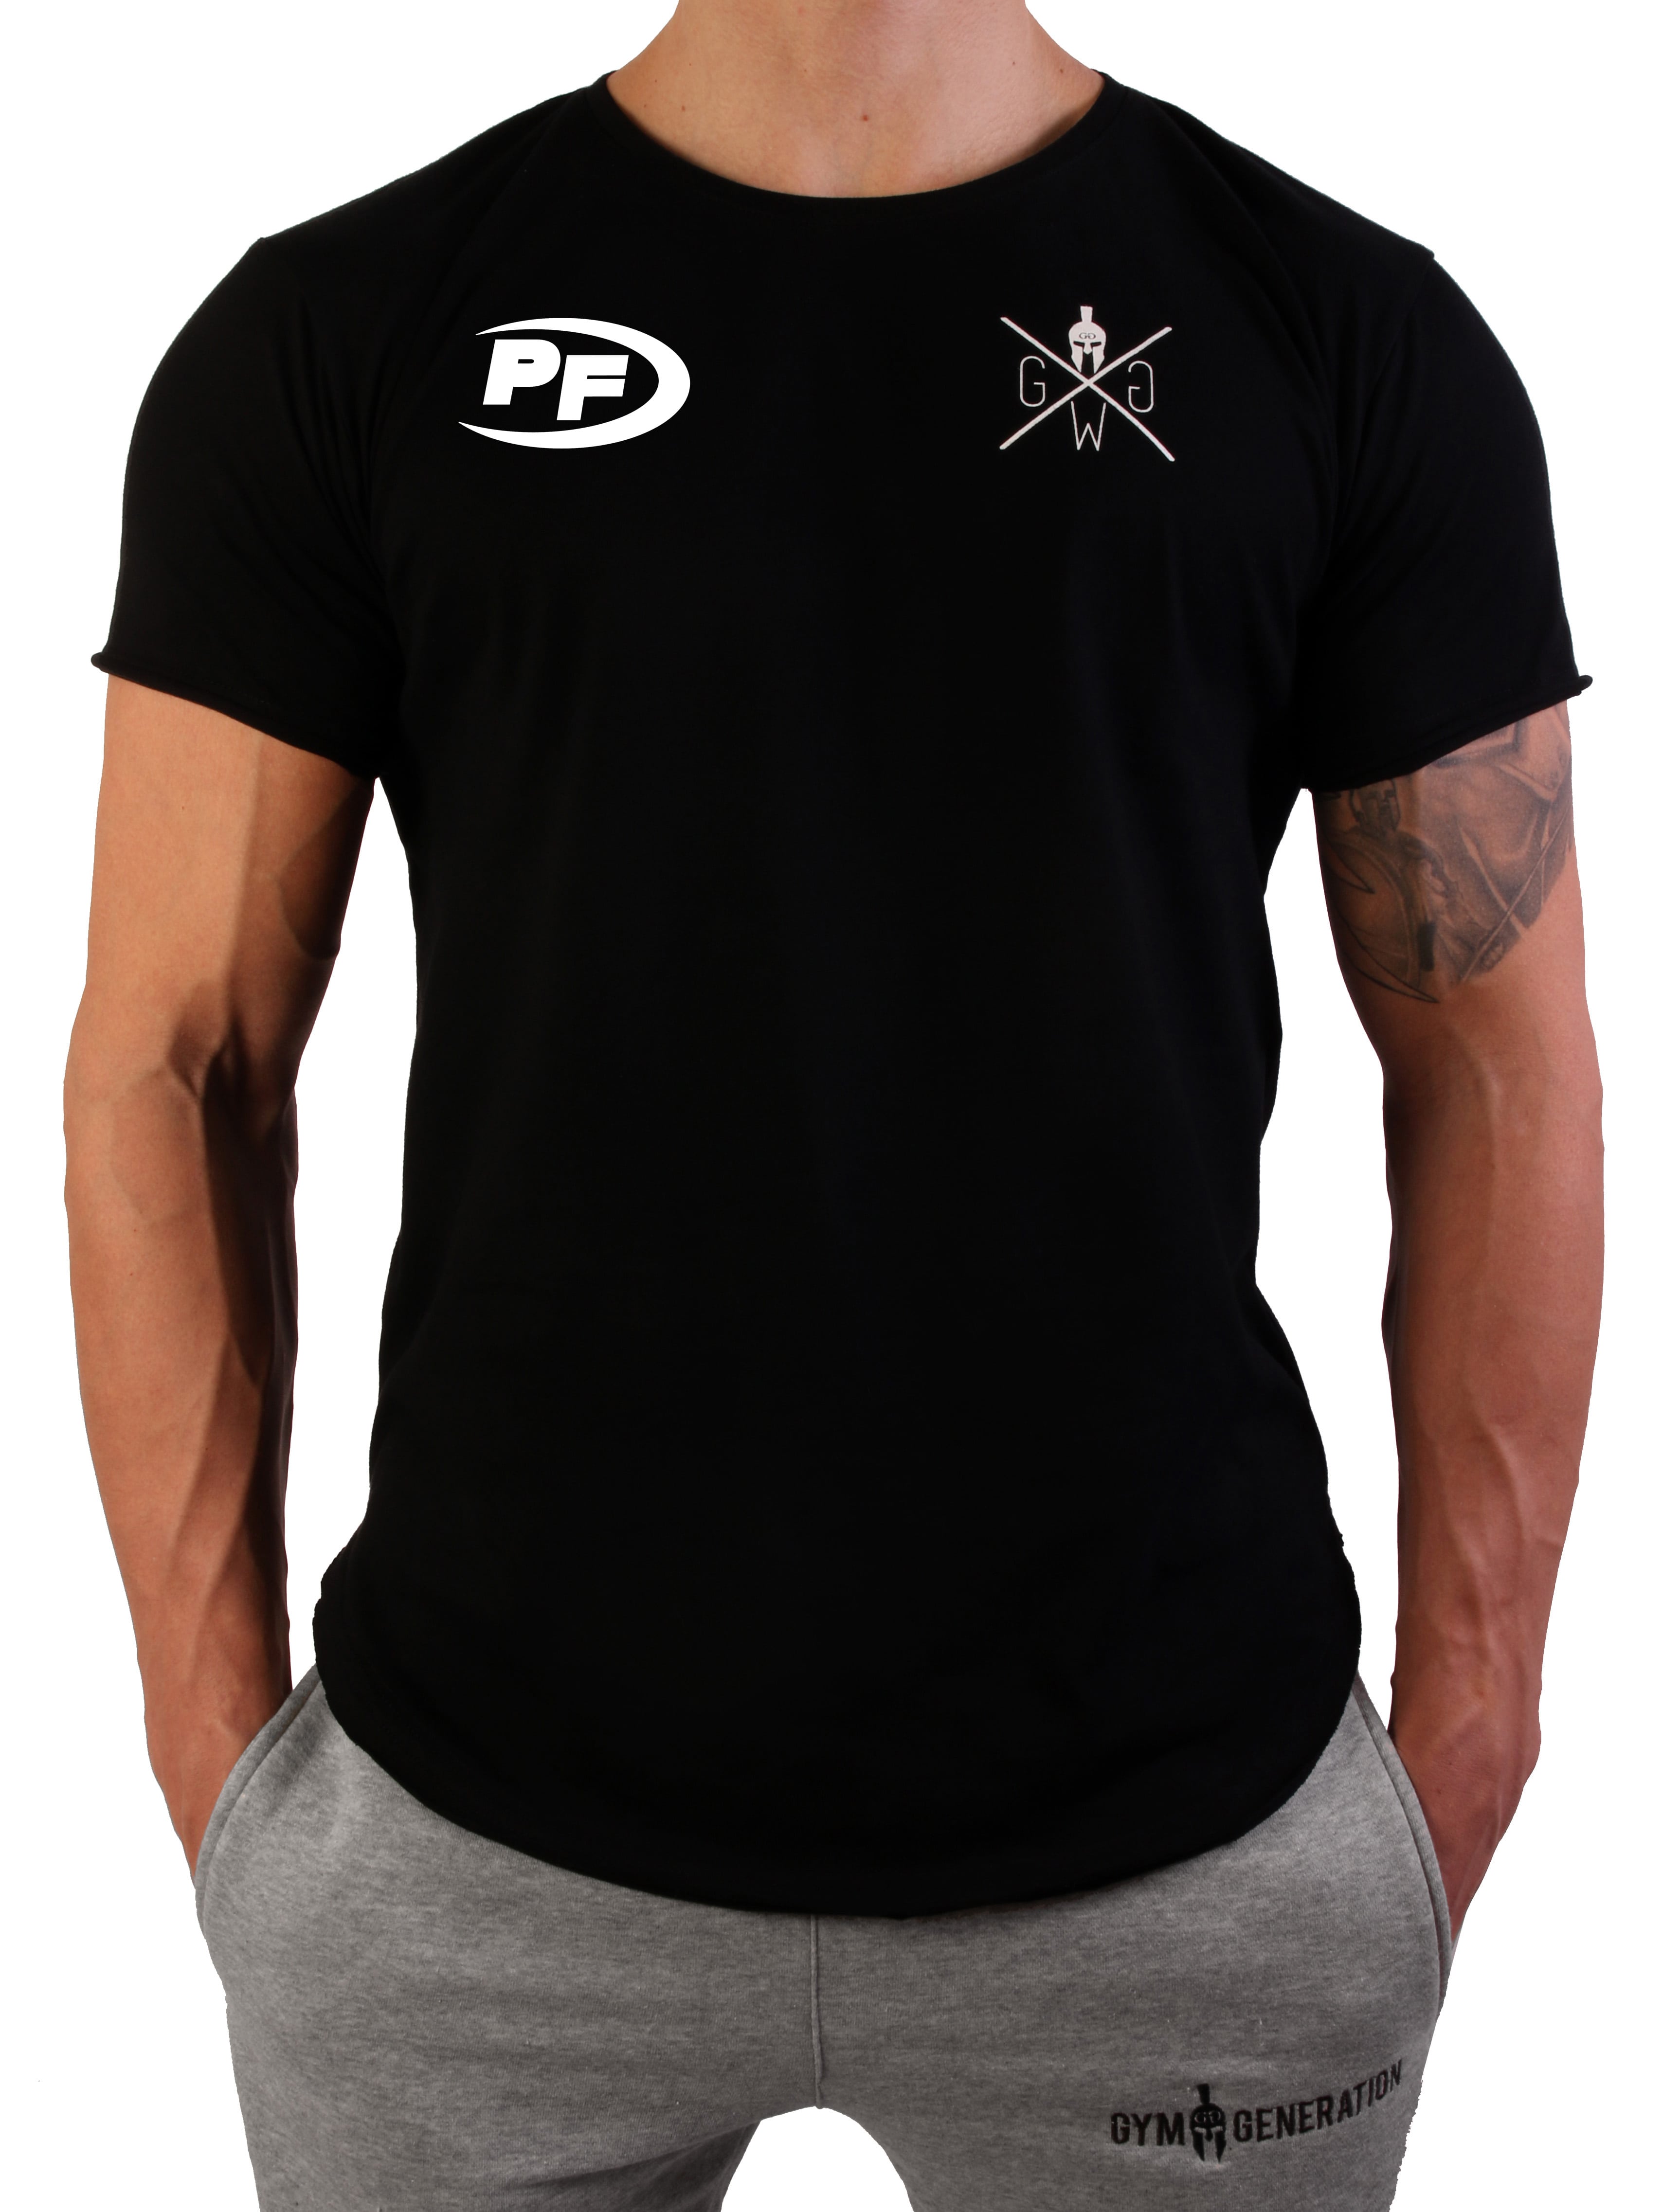 PowerFood Prime Shirt BLACK by Gym Generation